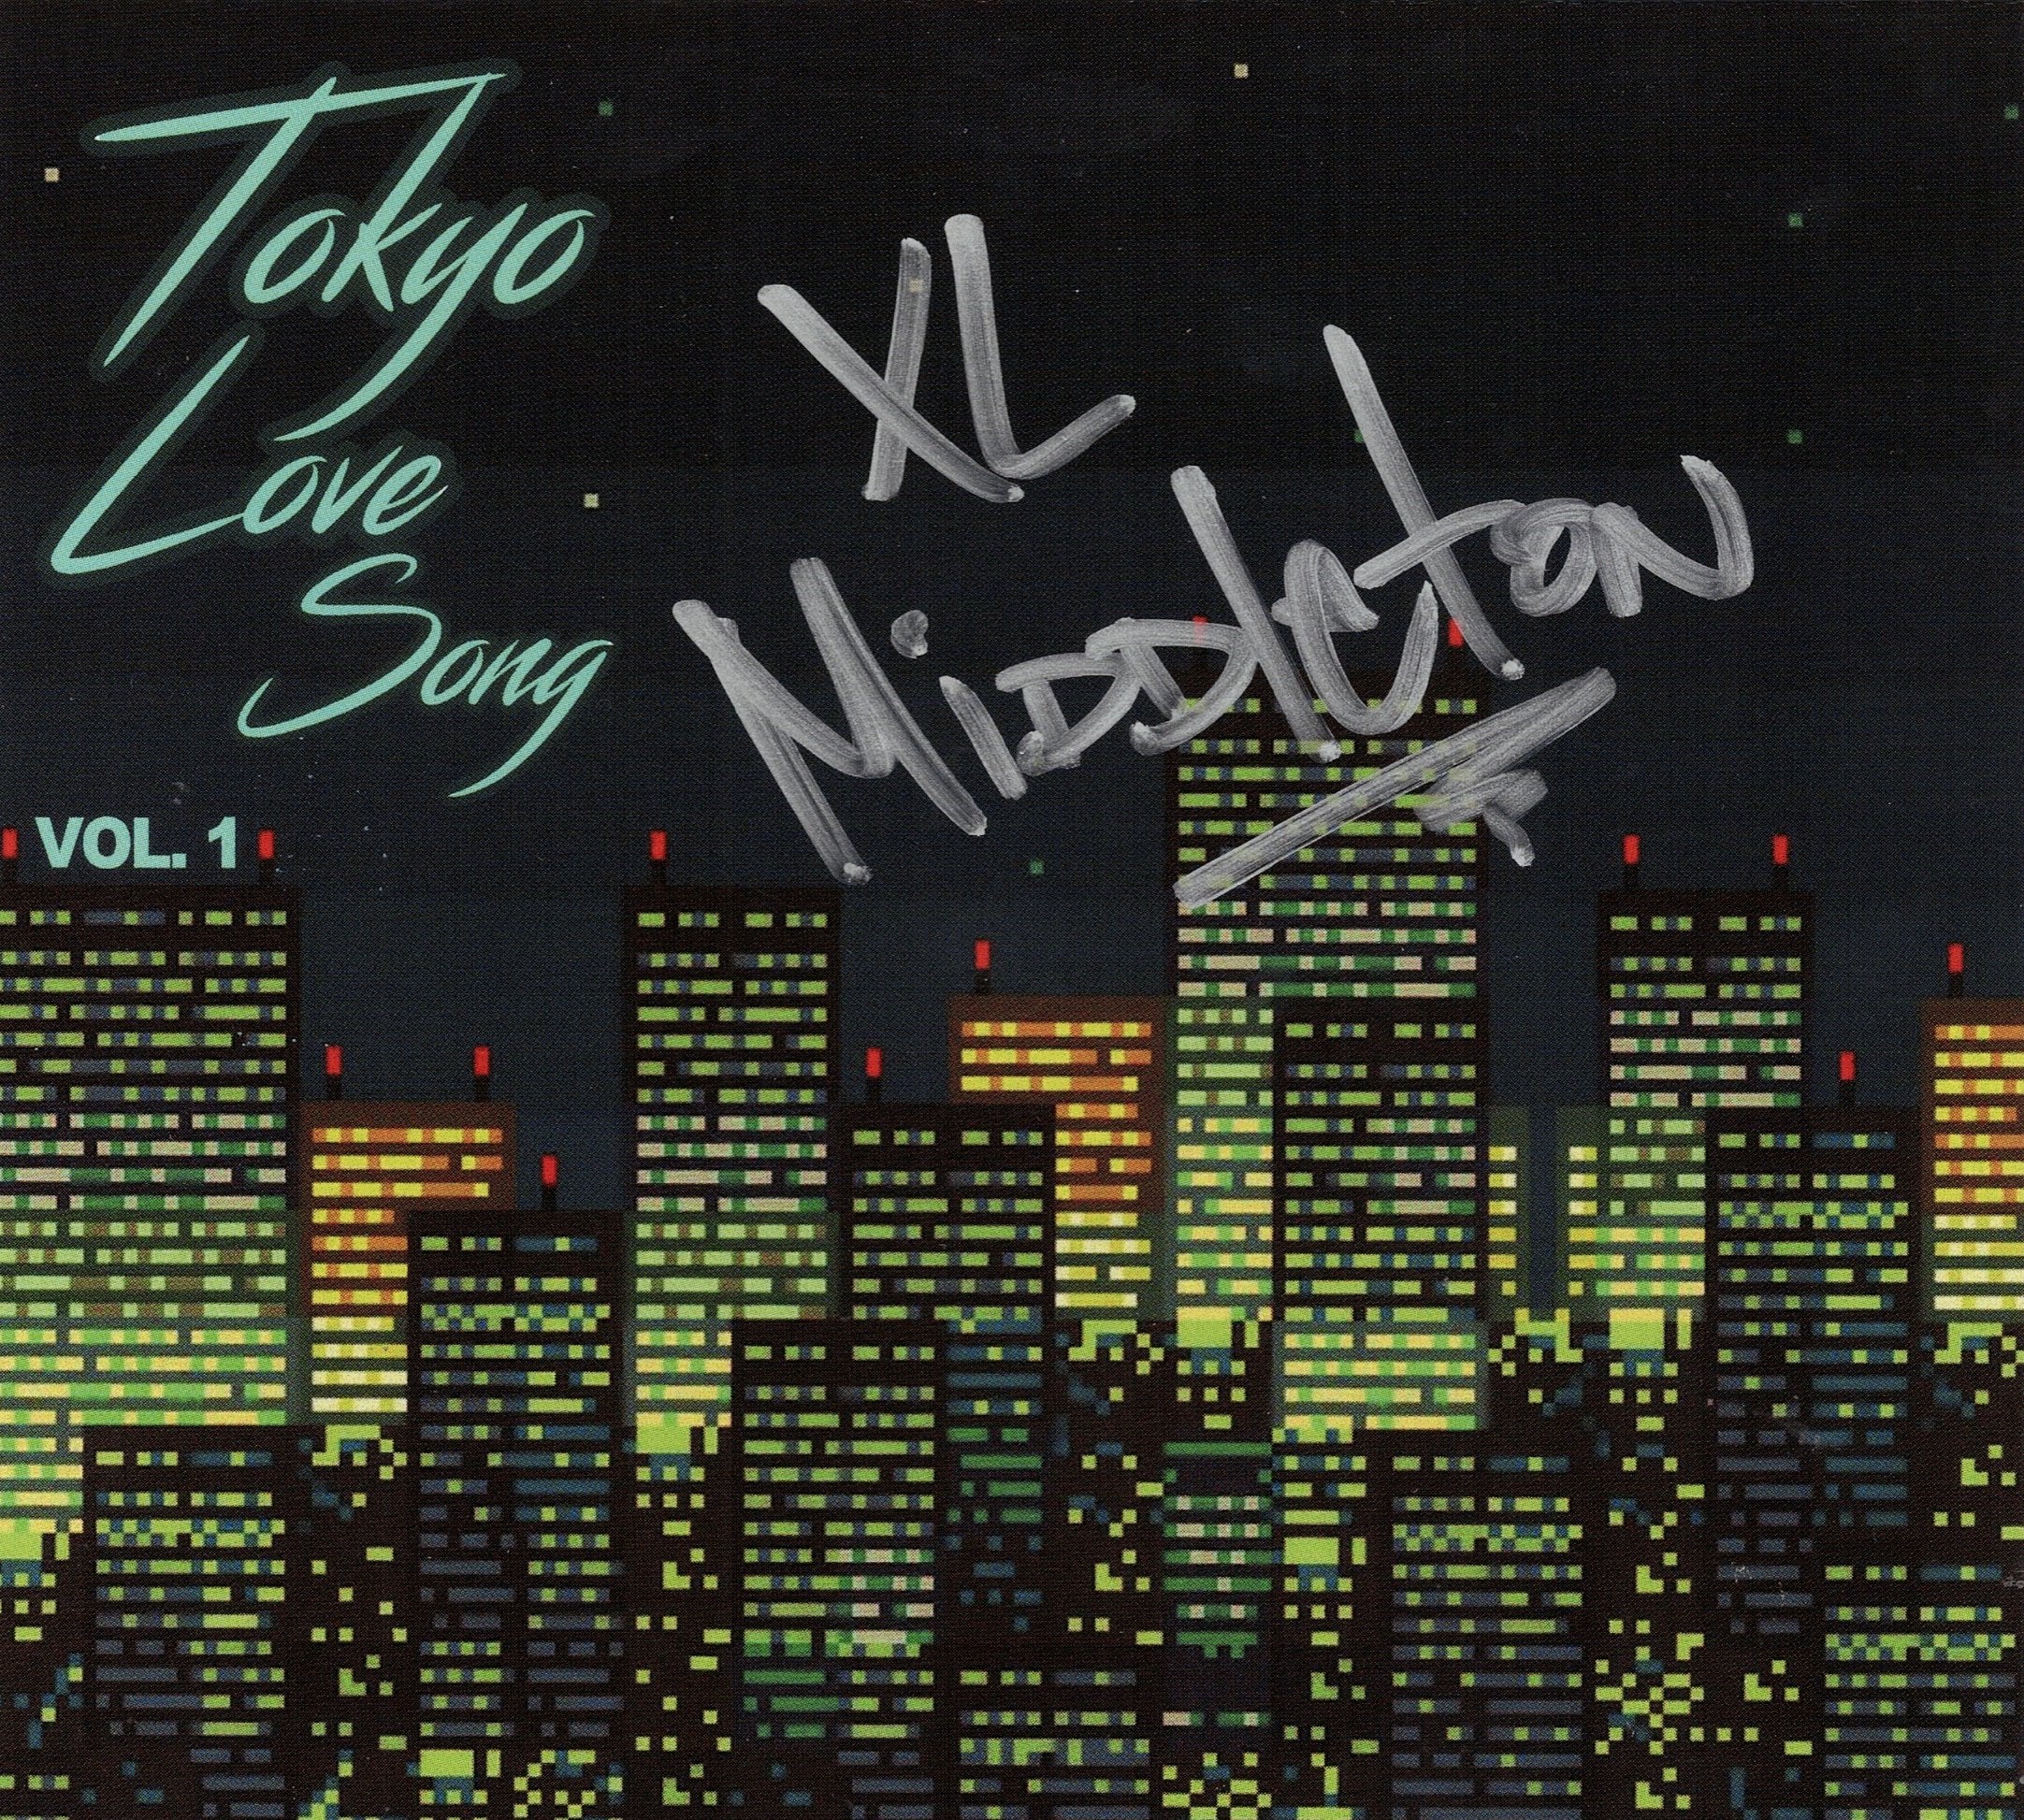 XL Middleton - Tokyo Love Song Vol. 1 (サイン入り限定盤 